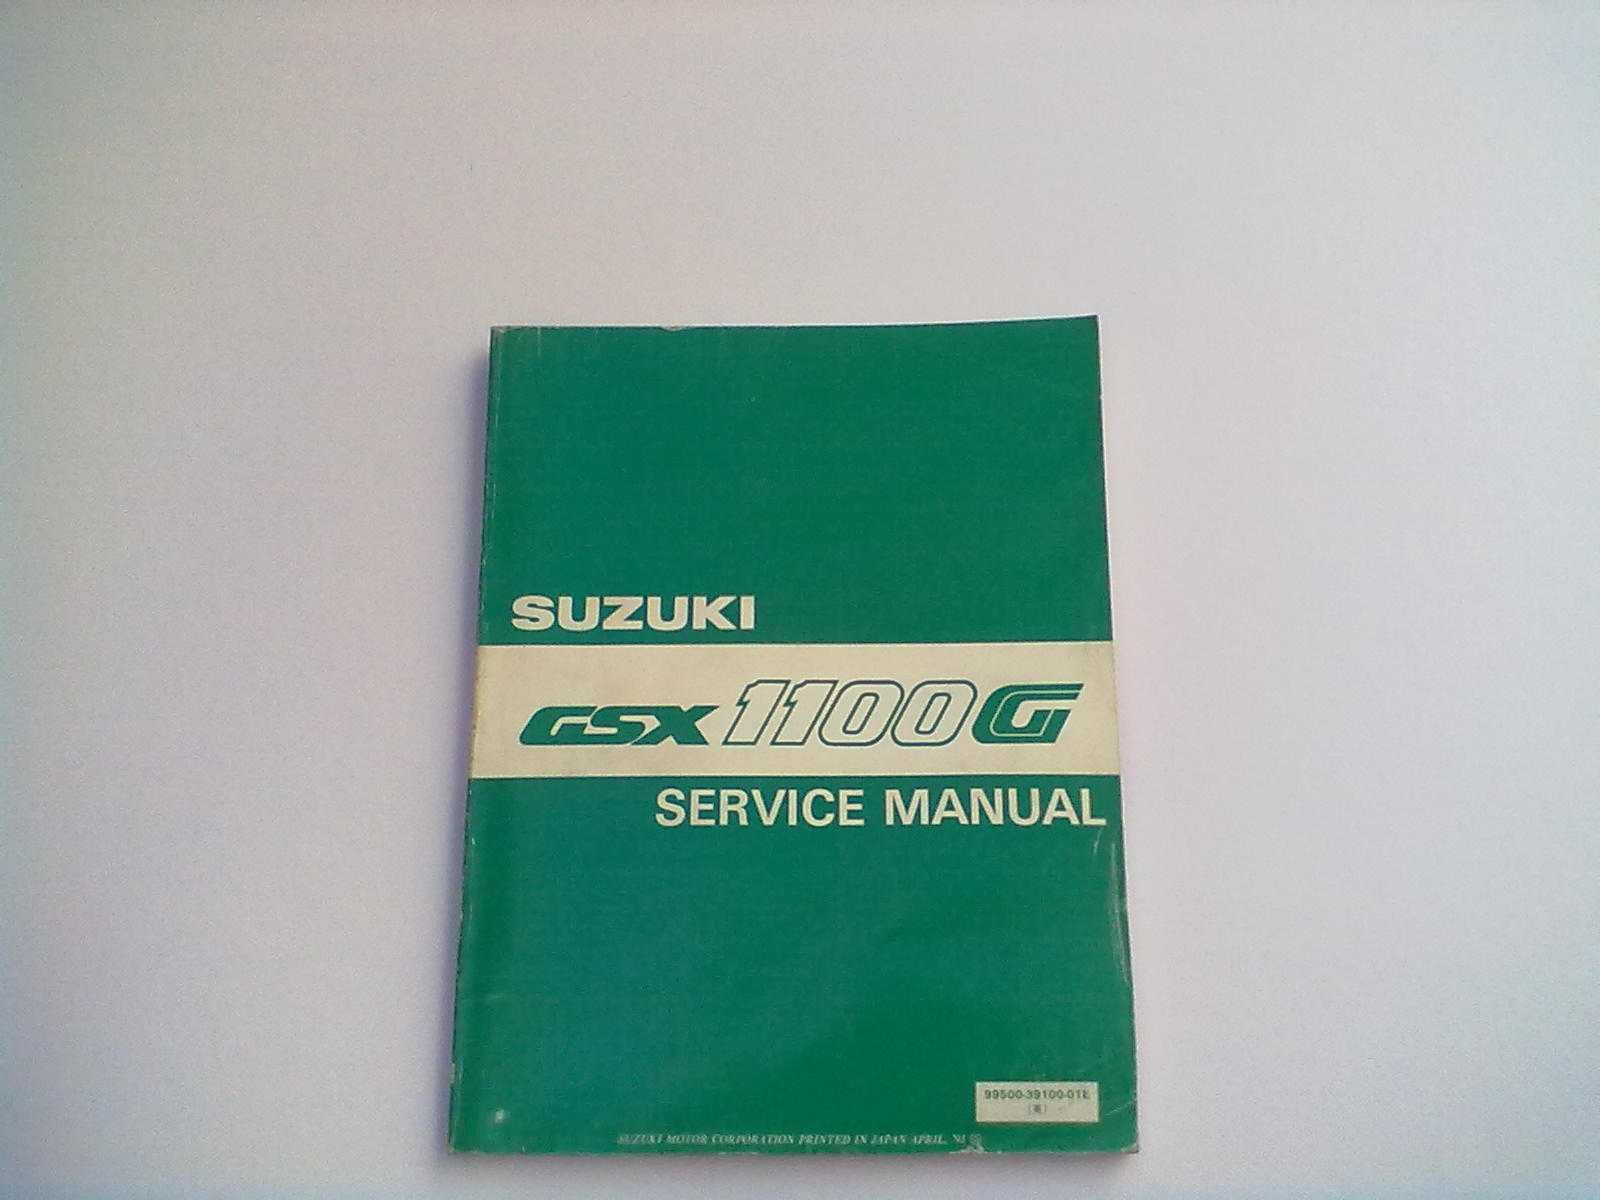 Manual Técnico Oficial Suzuki GSX 1100G